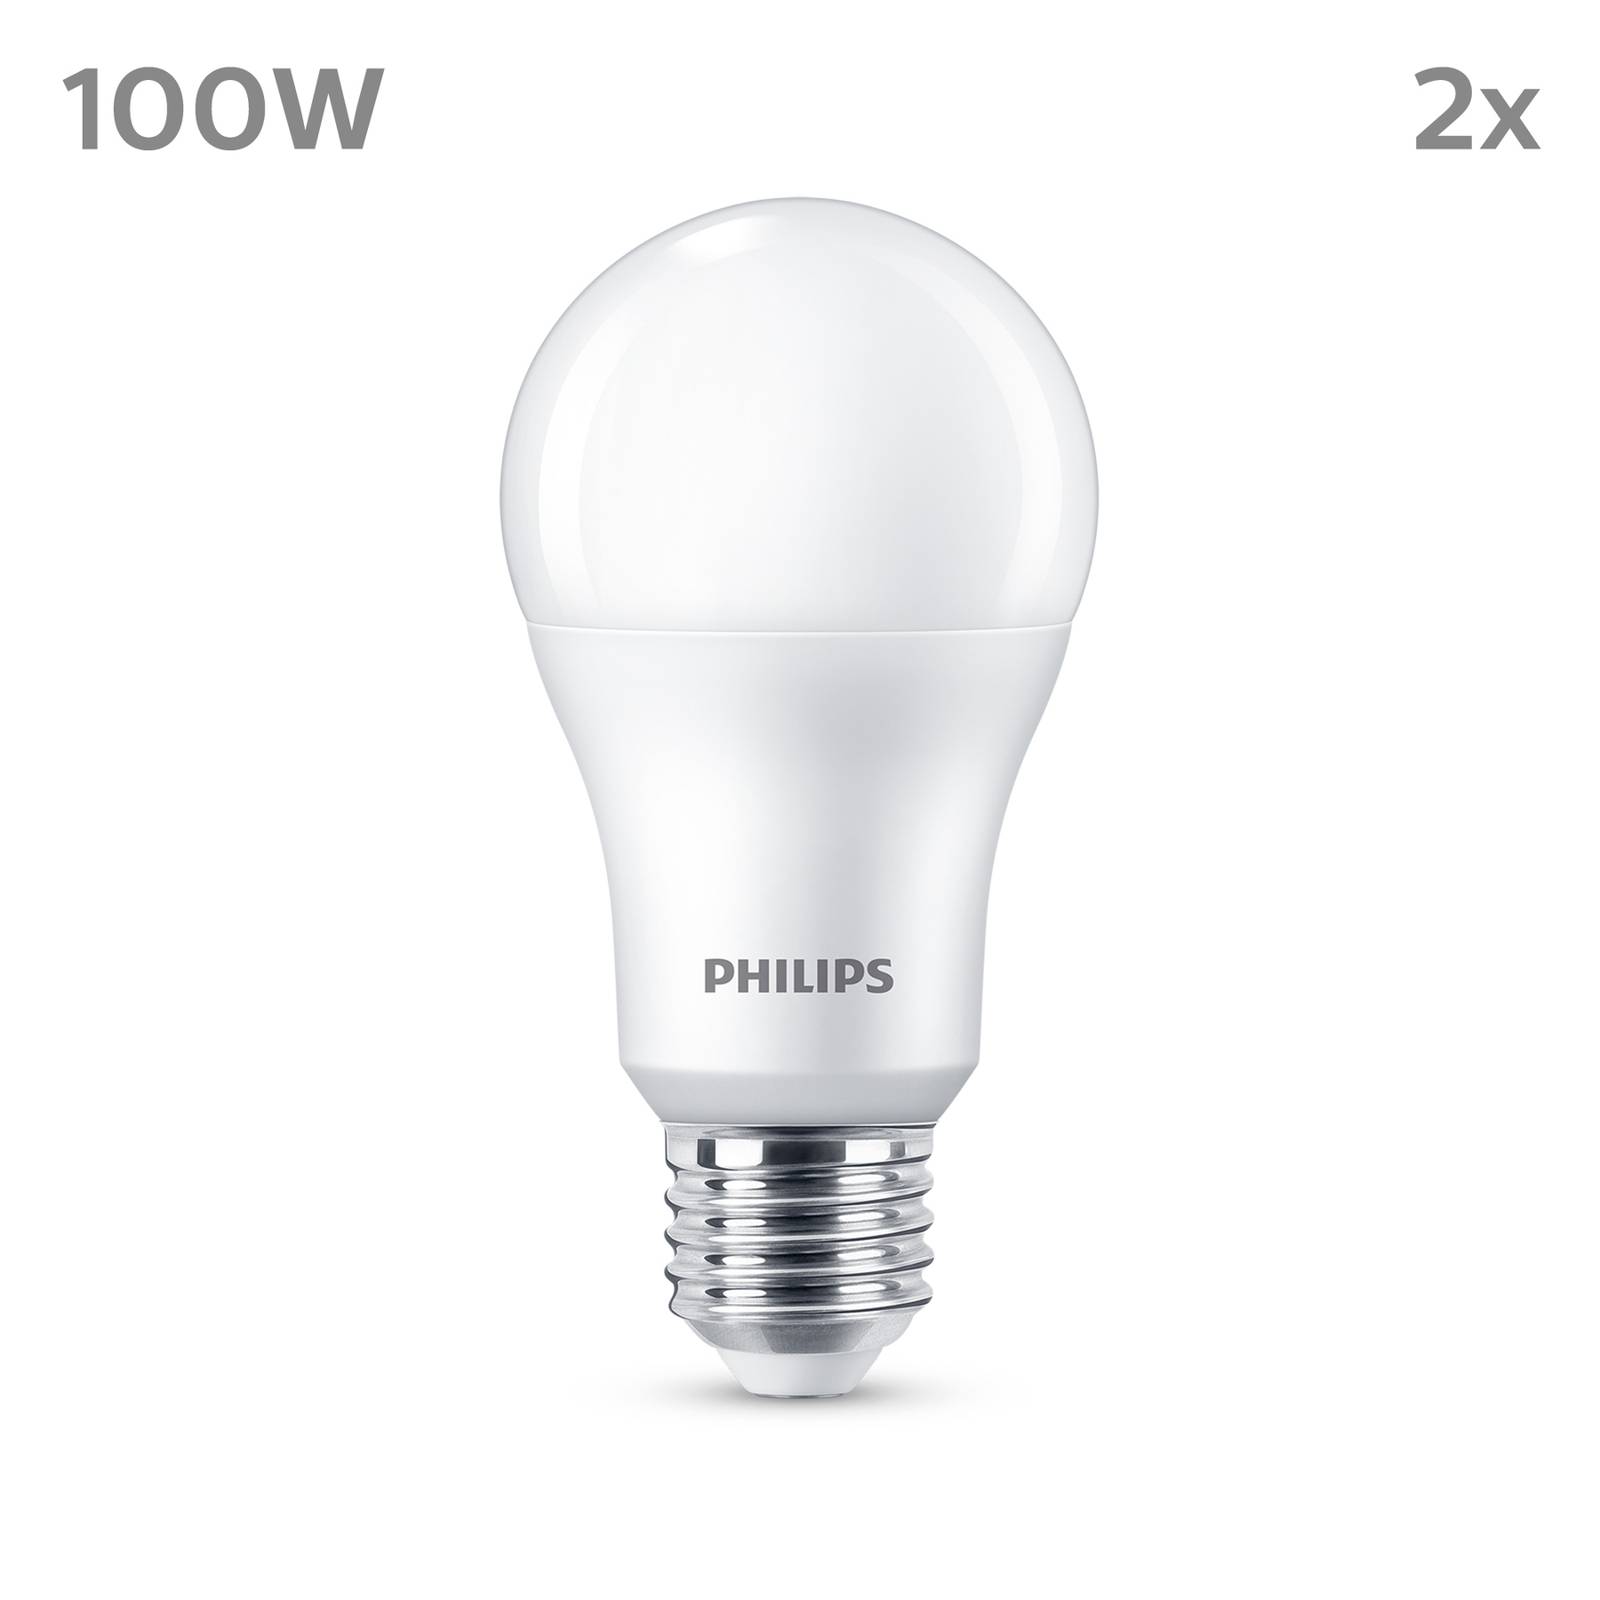 Philips LED E27 13W 1 521lm 4 000 K matná 2 ks